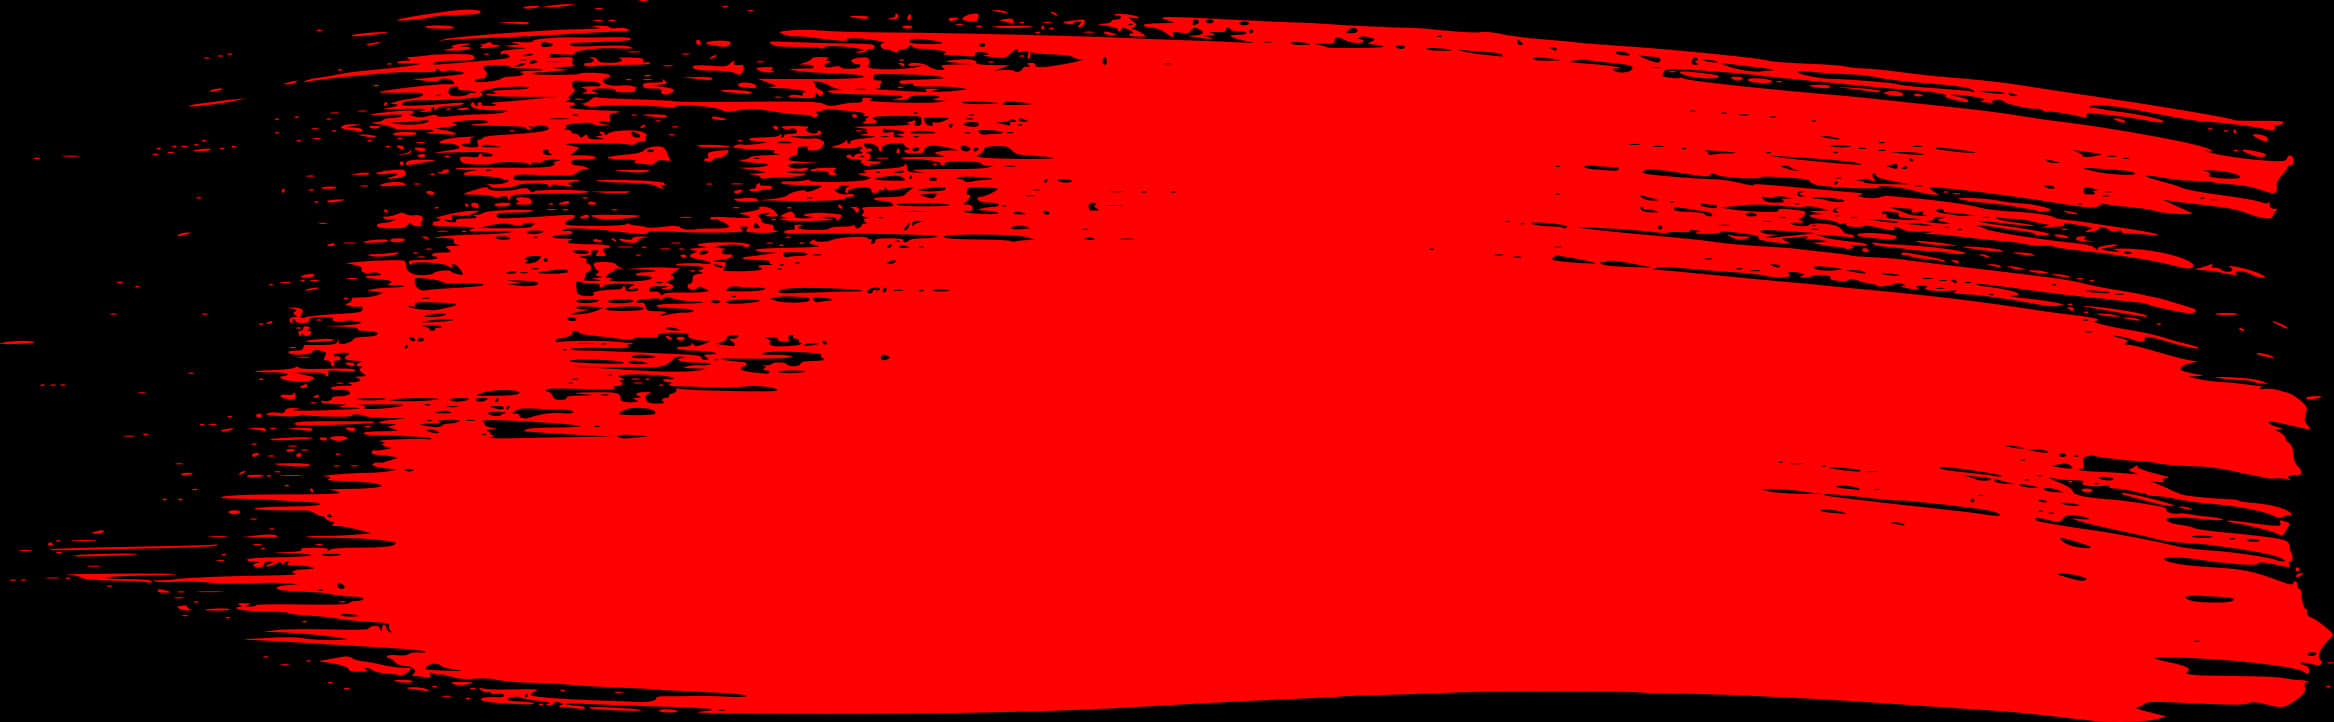 Vibrant Red Brush Strokeon Black Background.jpg PNG